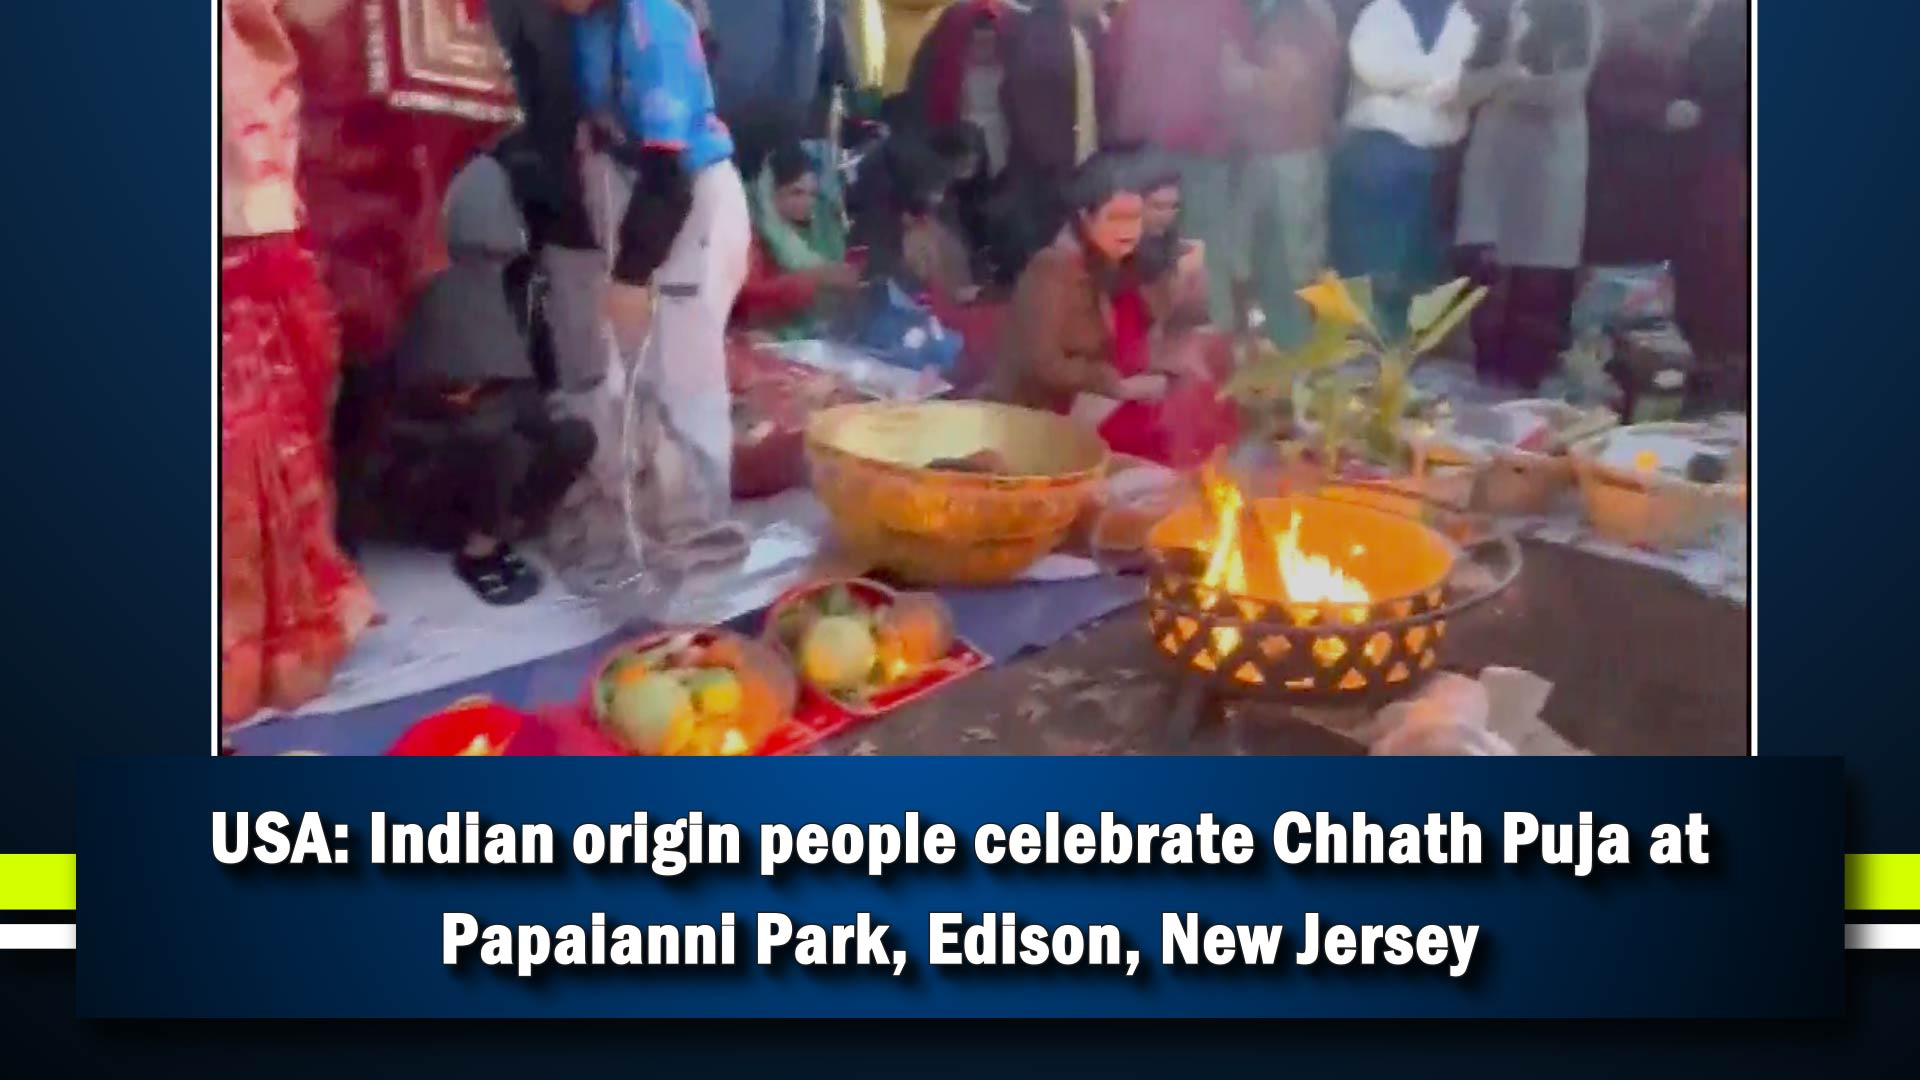 USA: Indian origin people celebrate Chhath Puja at Papaianni Park, Edison, New Jersey